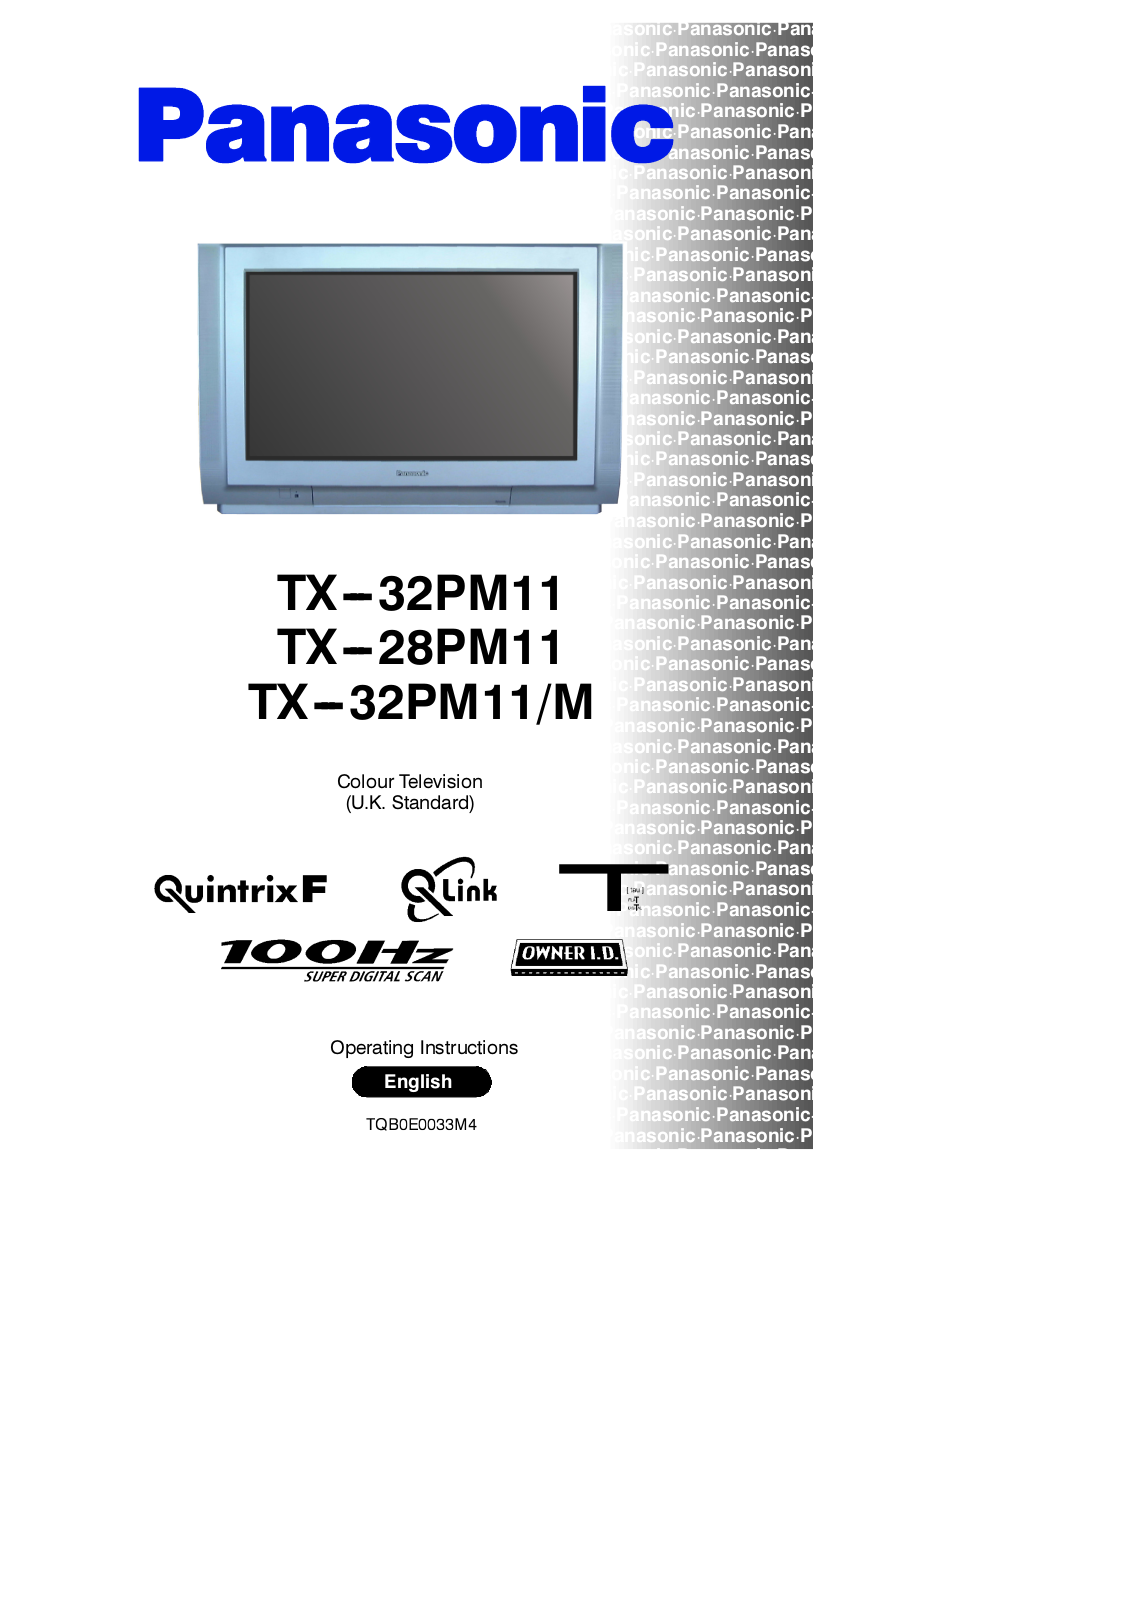 Panasonic TX-28PM11, TX-32PM11M, TX-32PM11 User Manual